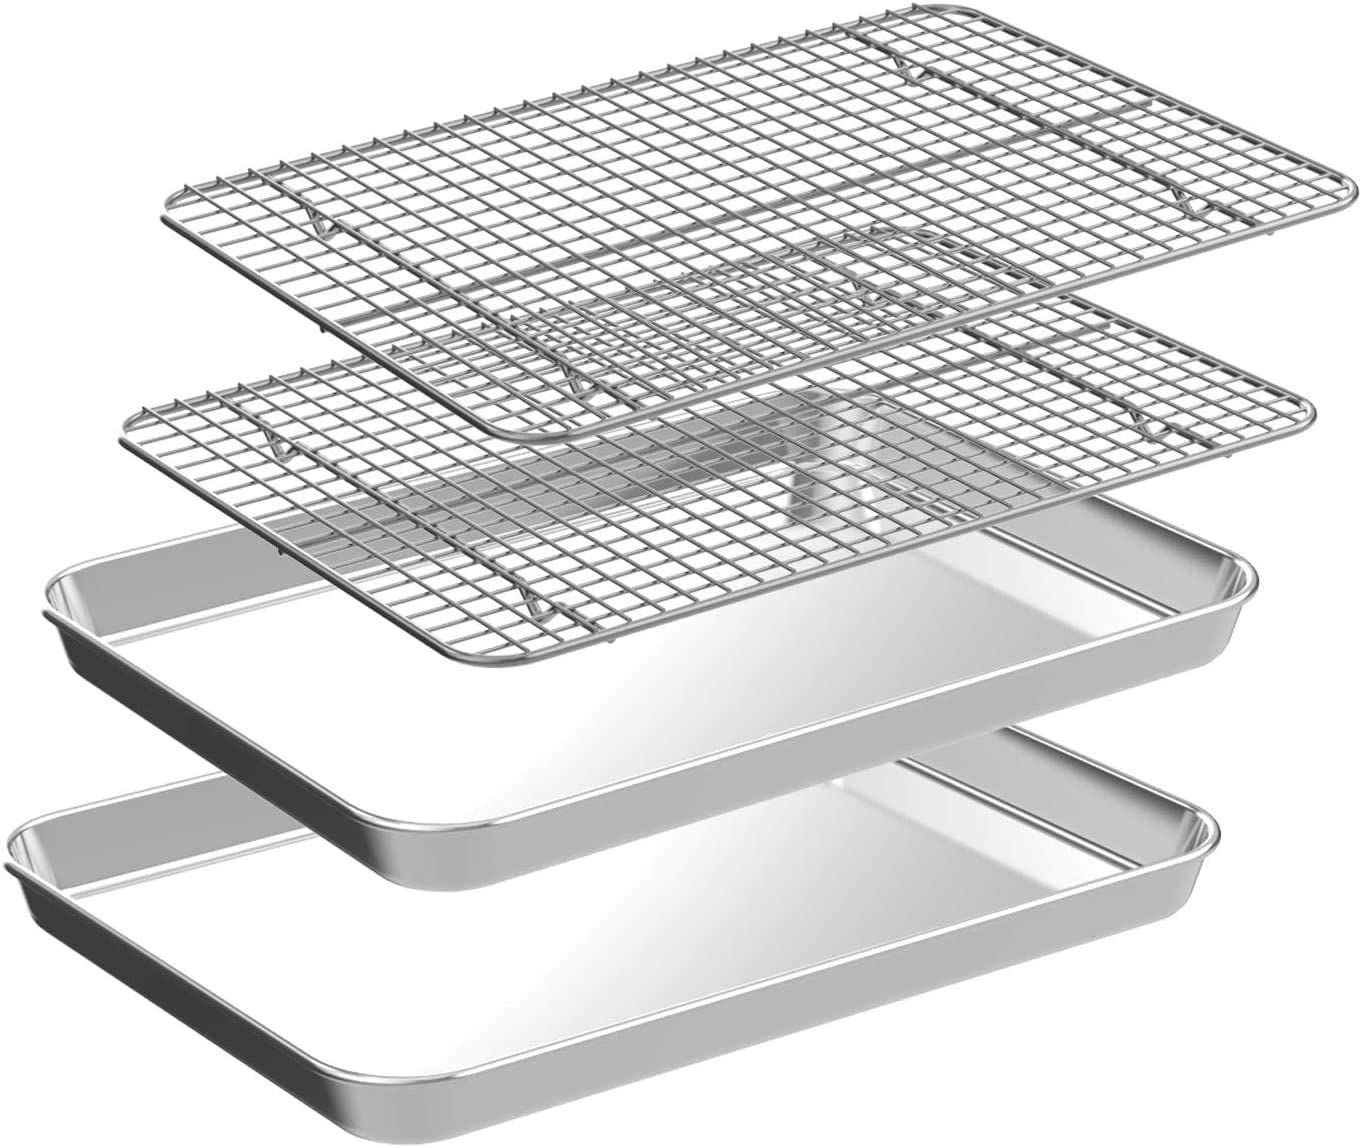 CEKEE Dishwasher Safe Polished Stainless Steel Bakeware, 4-Piece